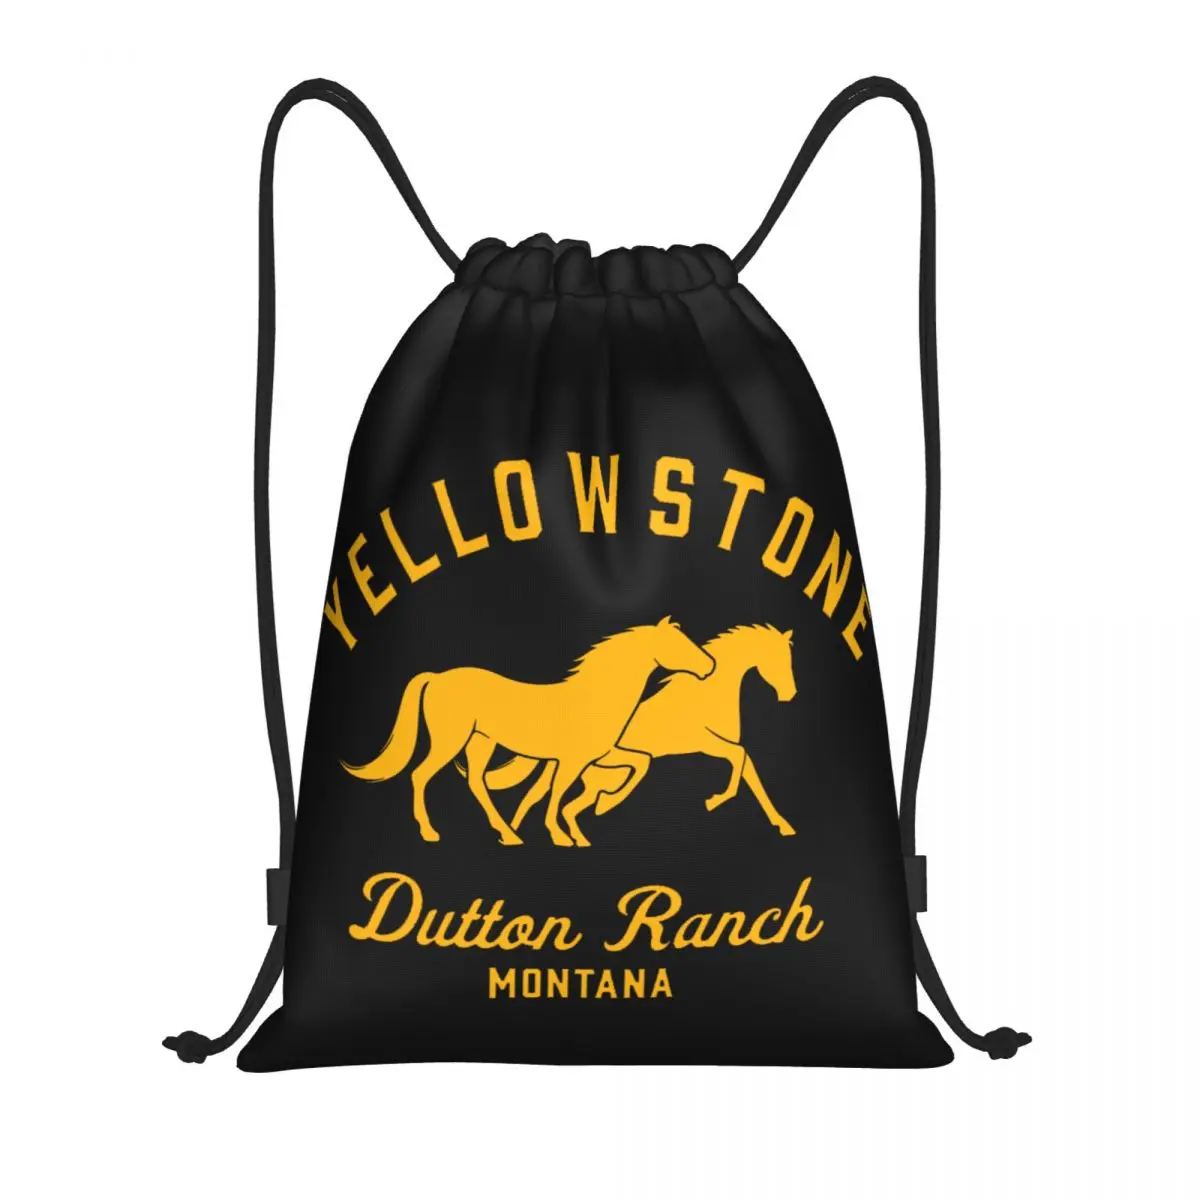 

Custom Dutton Ranch Yellowstone Drawstring Backpack Bags Men Women Lightweight Gym Sports Sackpack Sacks for Training